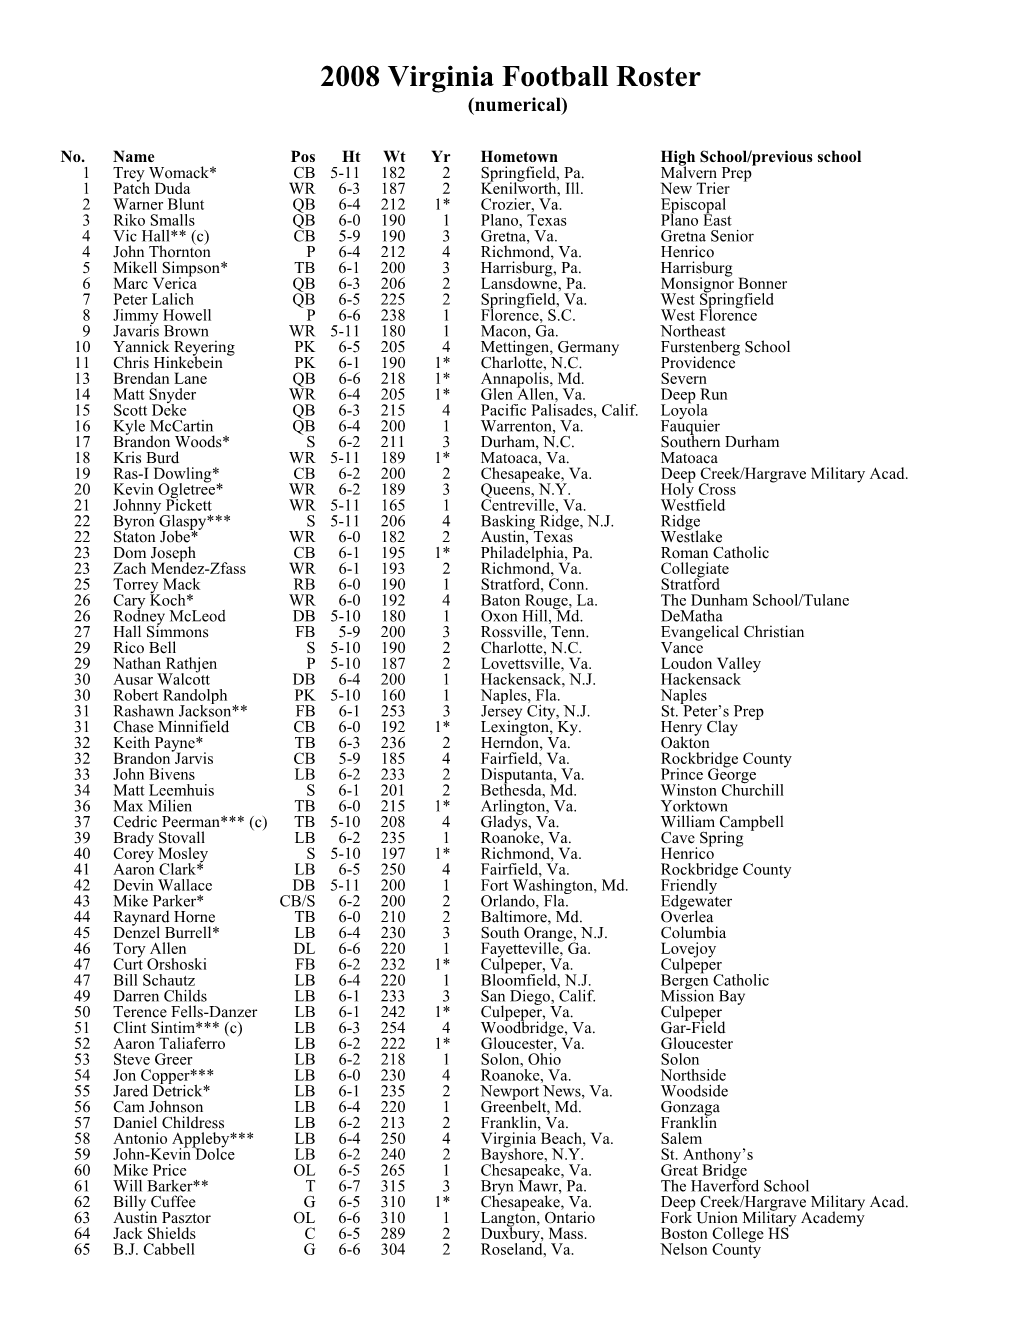 2008 Virginia Football Roster (Numerical)